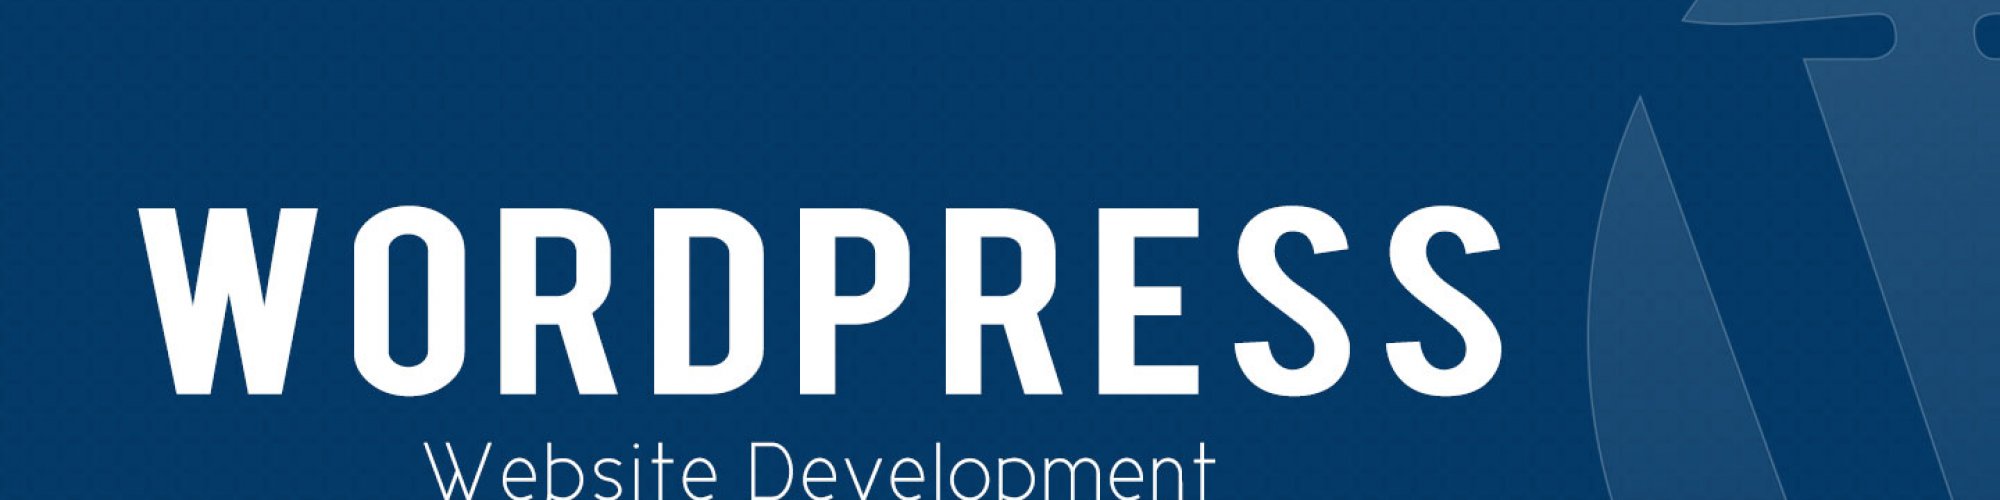 Wordpress development company | support & maintenance | WP security services- wordpresswebsite.in